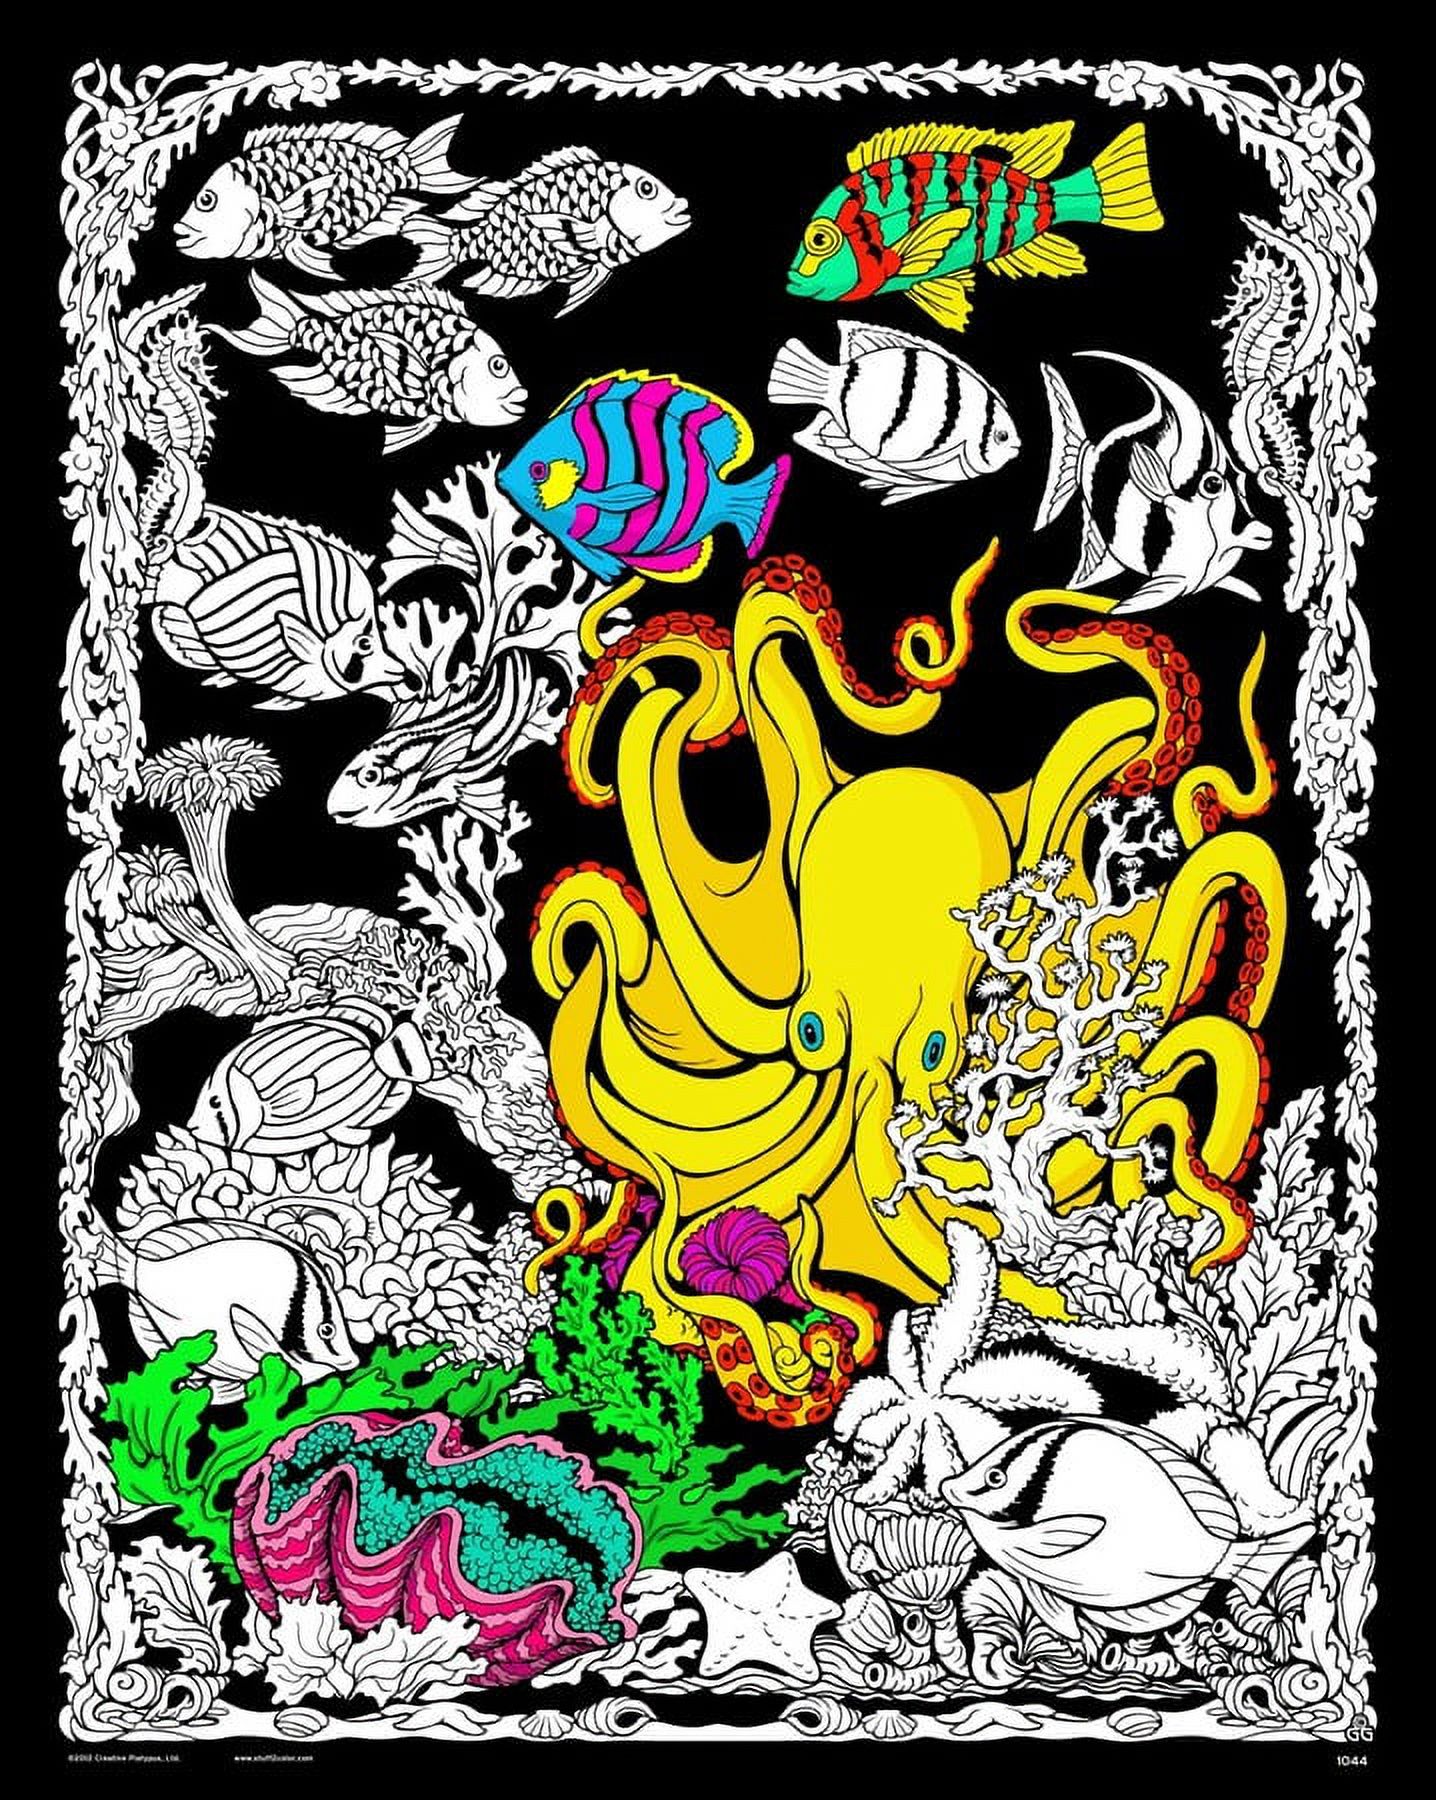 Octopus Den - Fuzzy Velvet Coloring Poster 16x20 Inches 